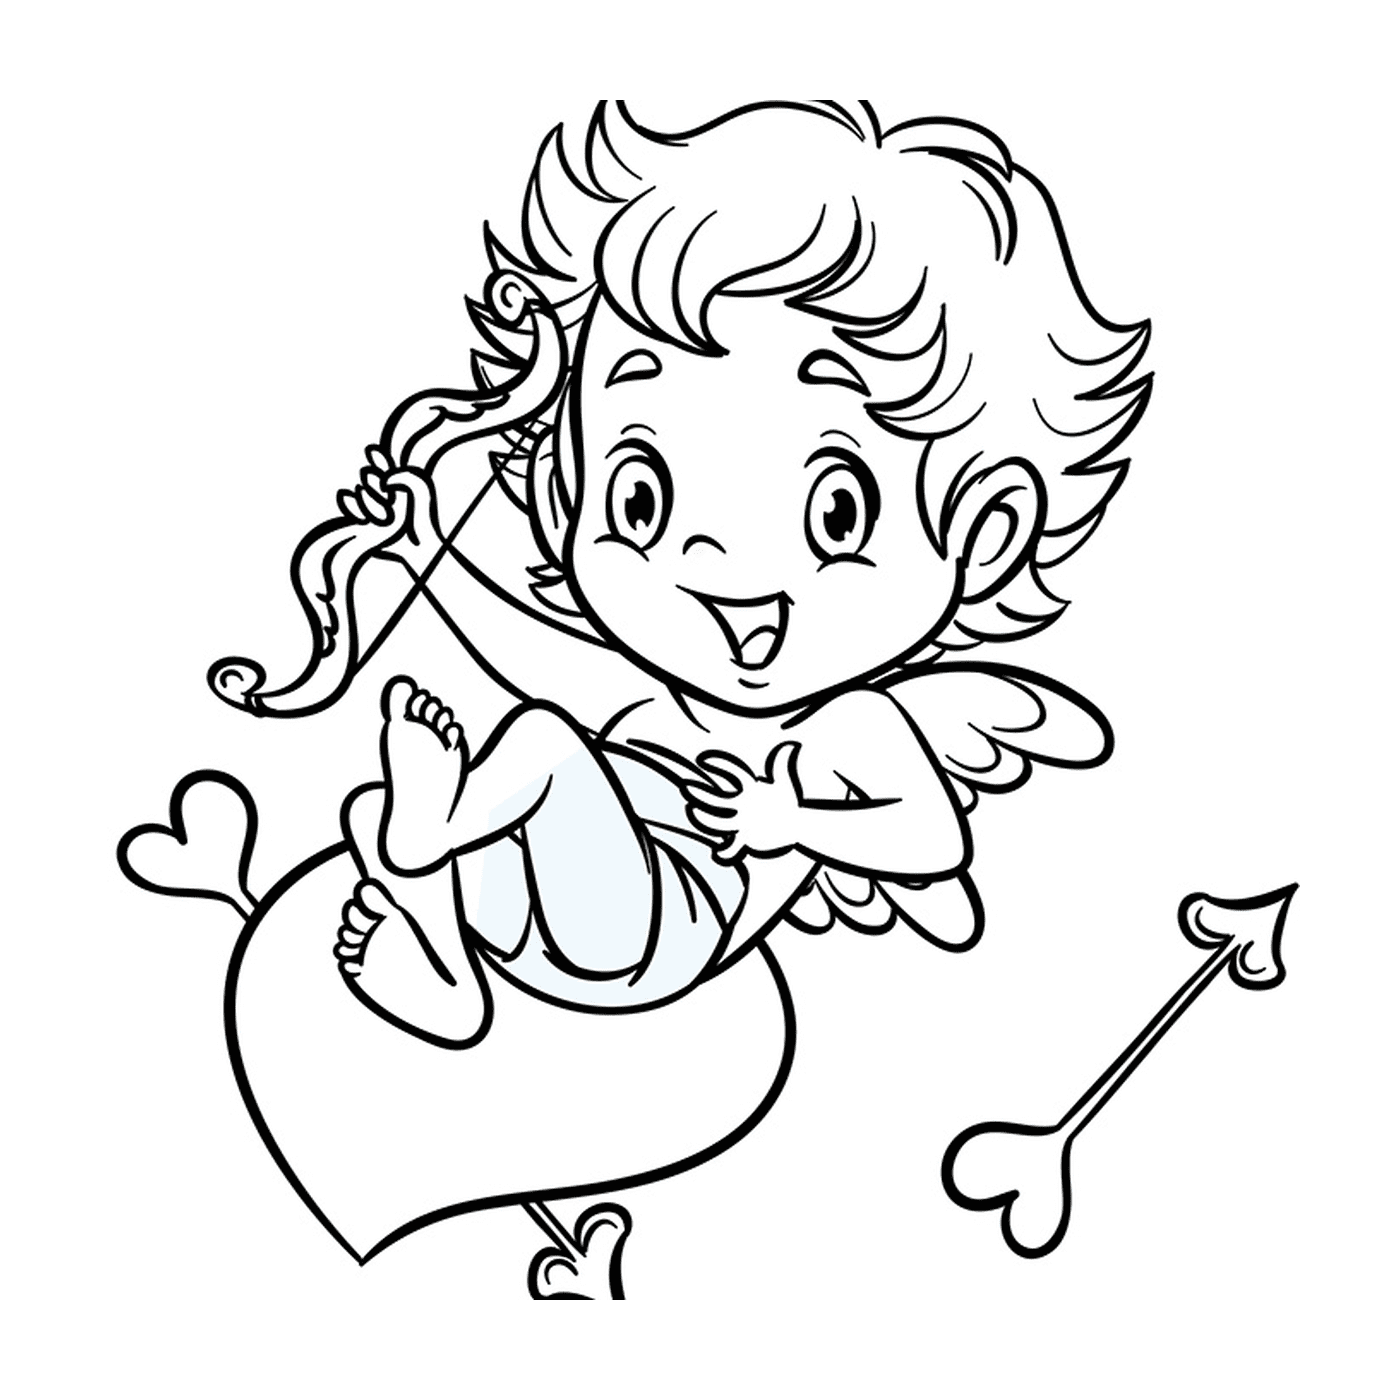  A little Cupid with a heart and an arrow 